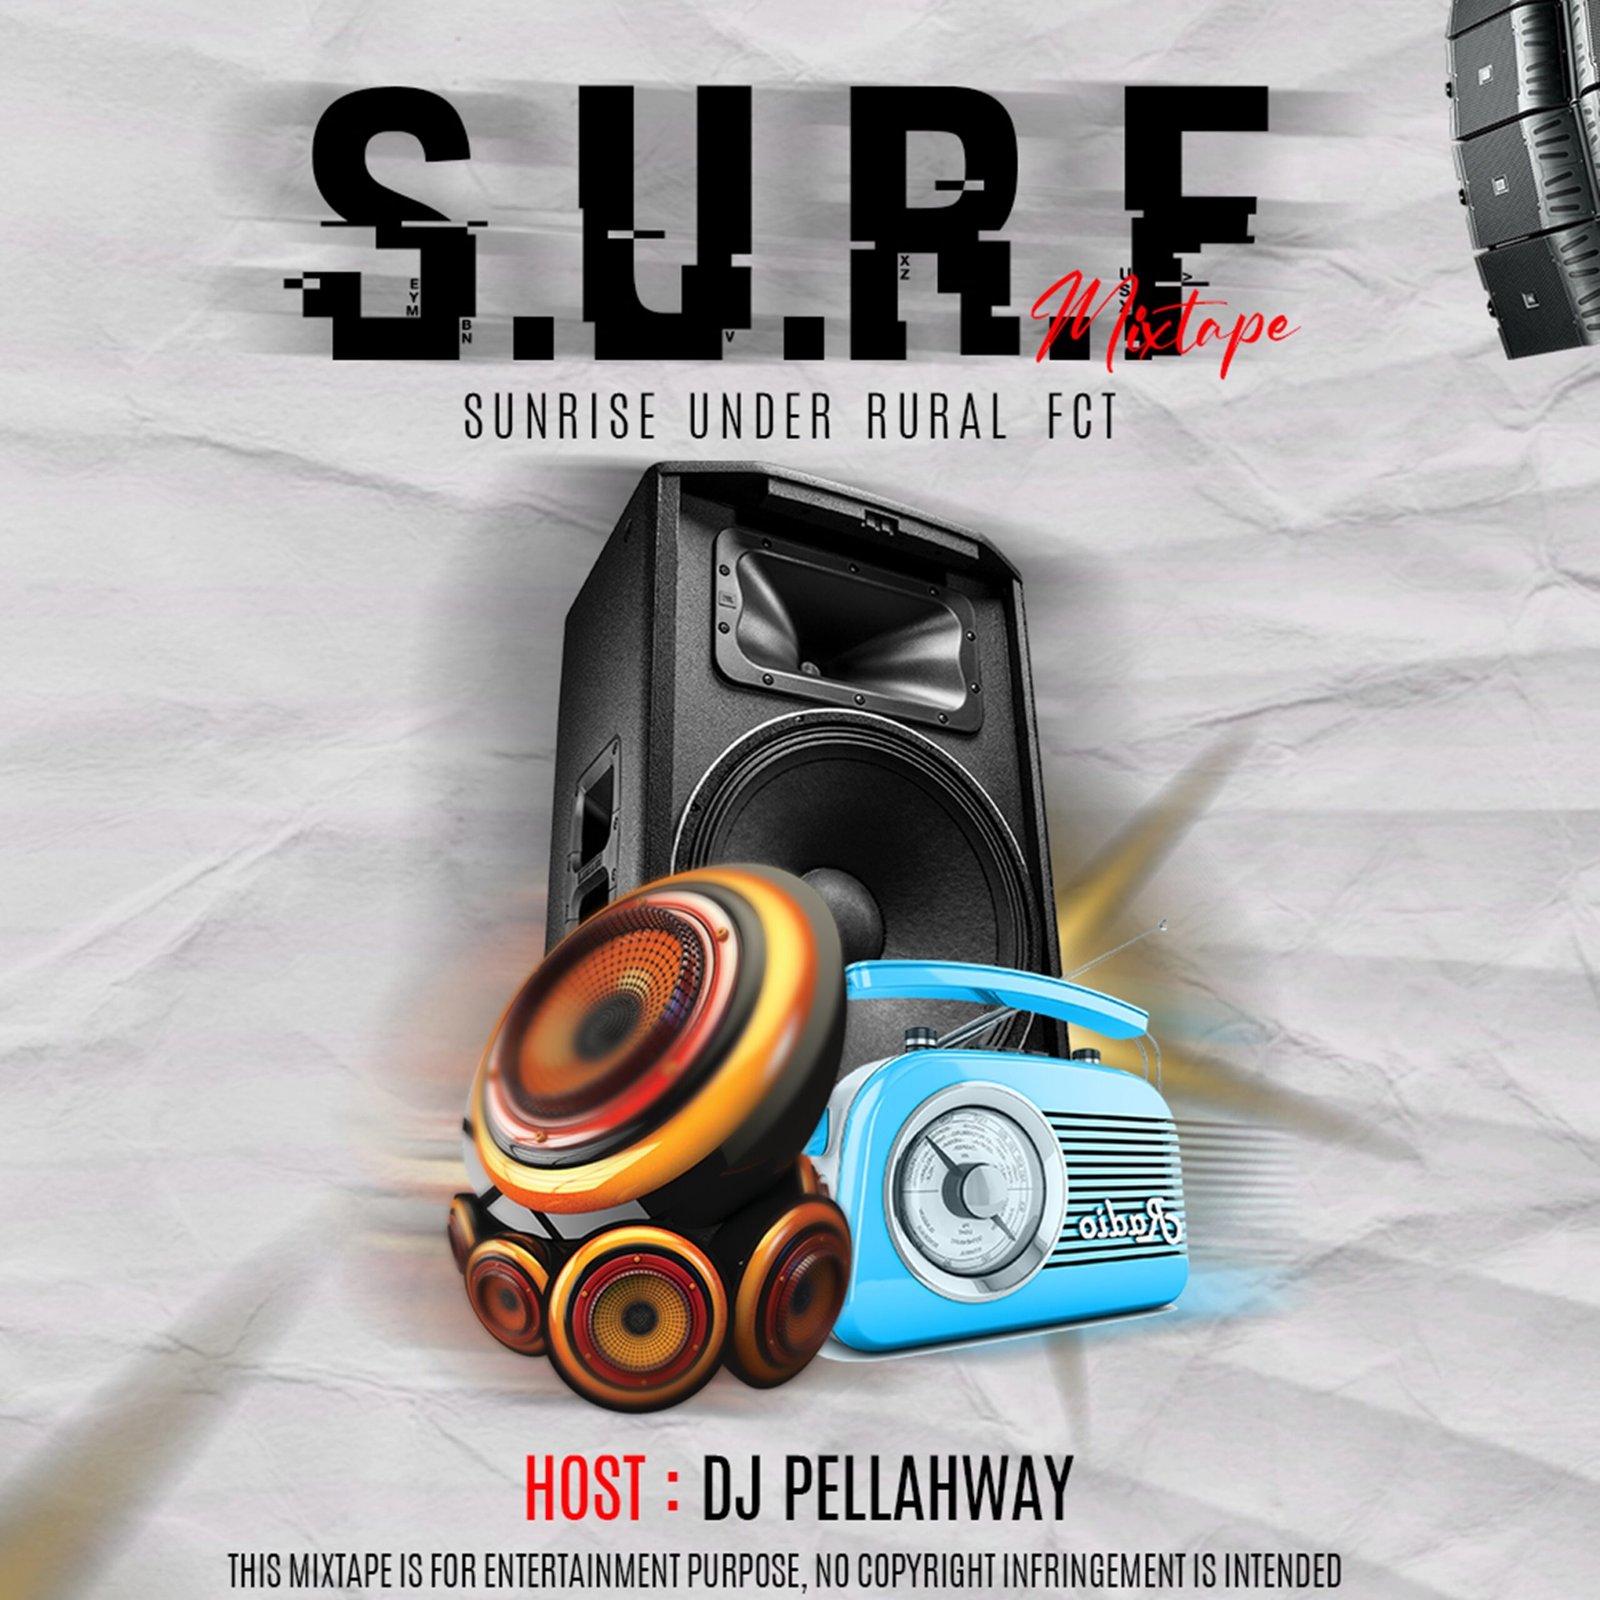 DJ PELLAWAY SURF EDIT